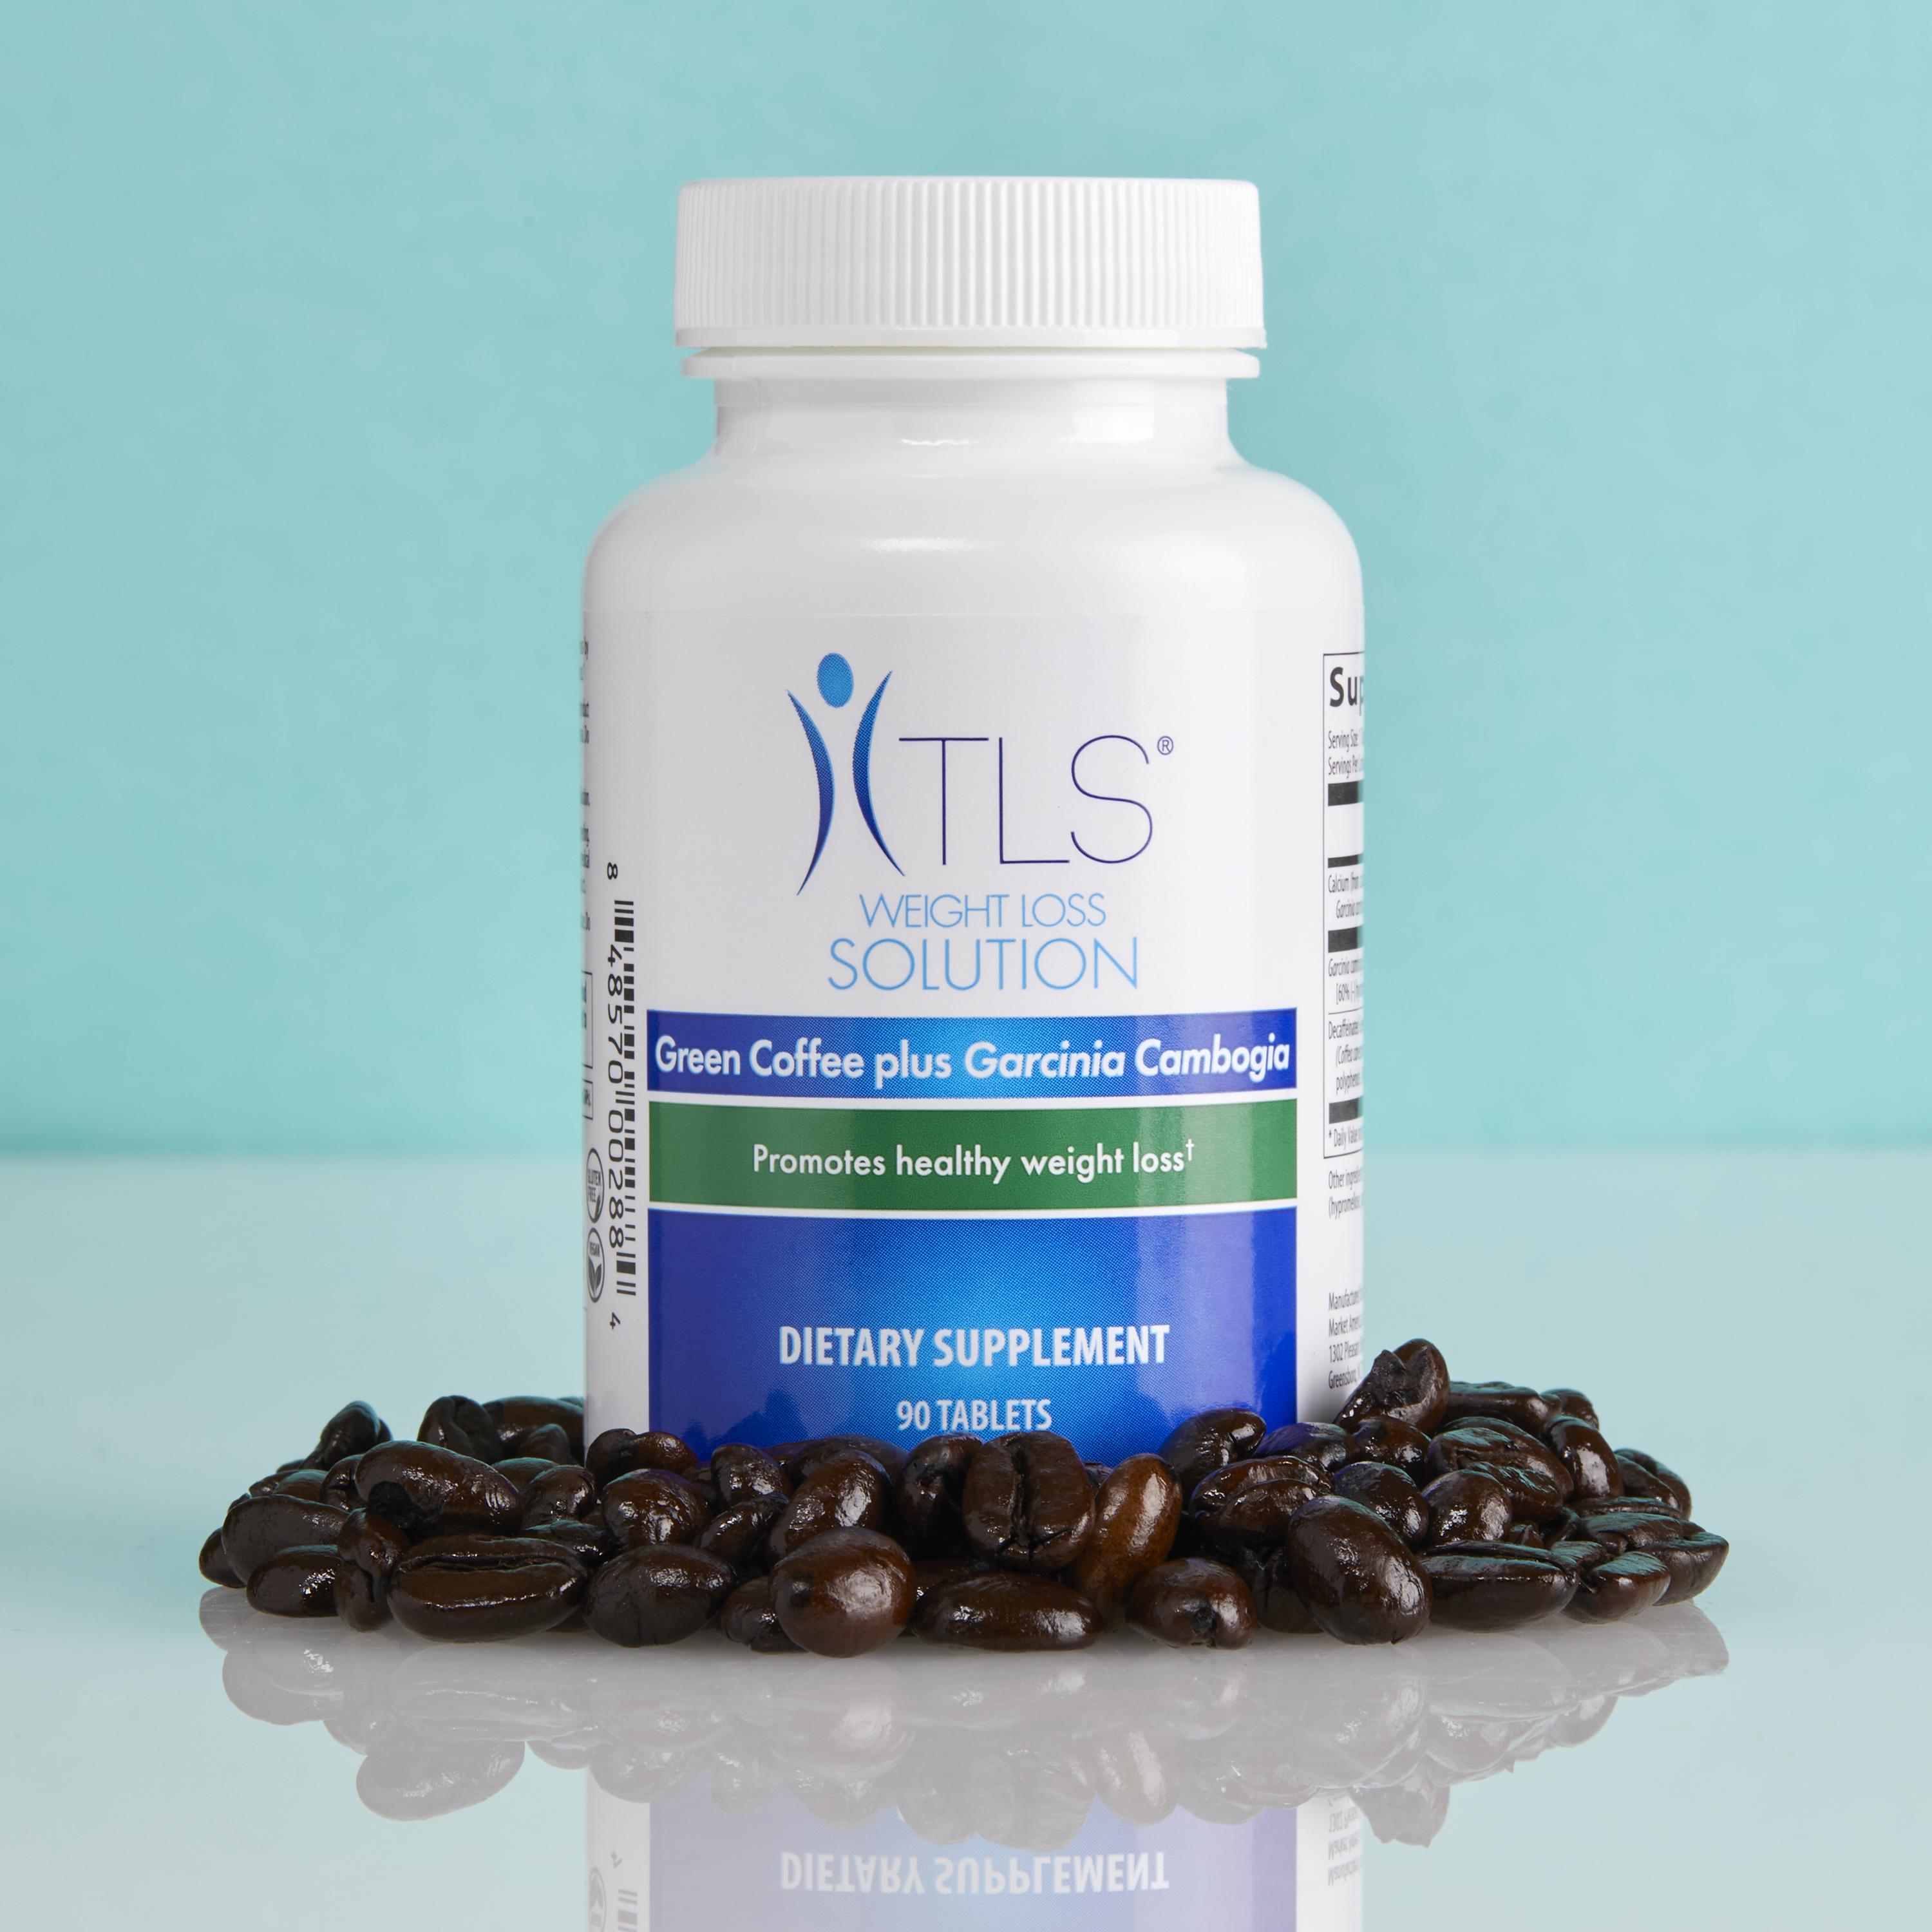 Primary Benefits* of TLS® Green Coffee Plus Garcinia Cambogia